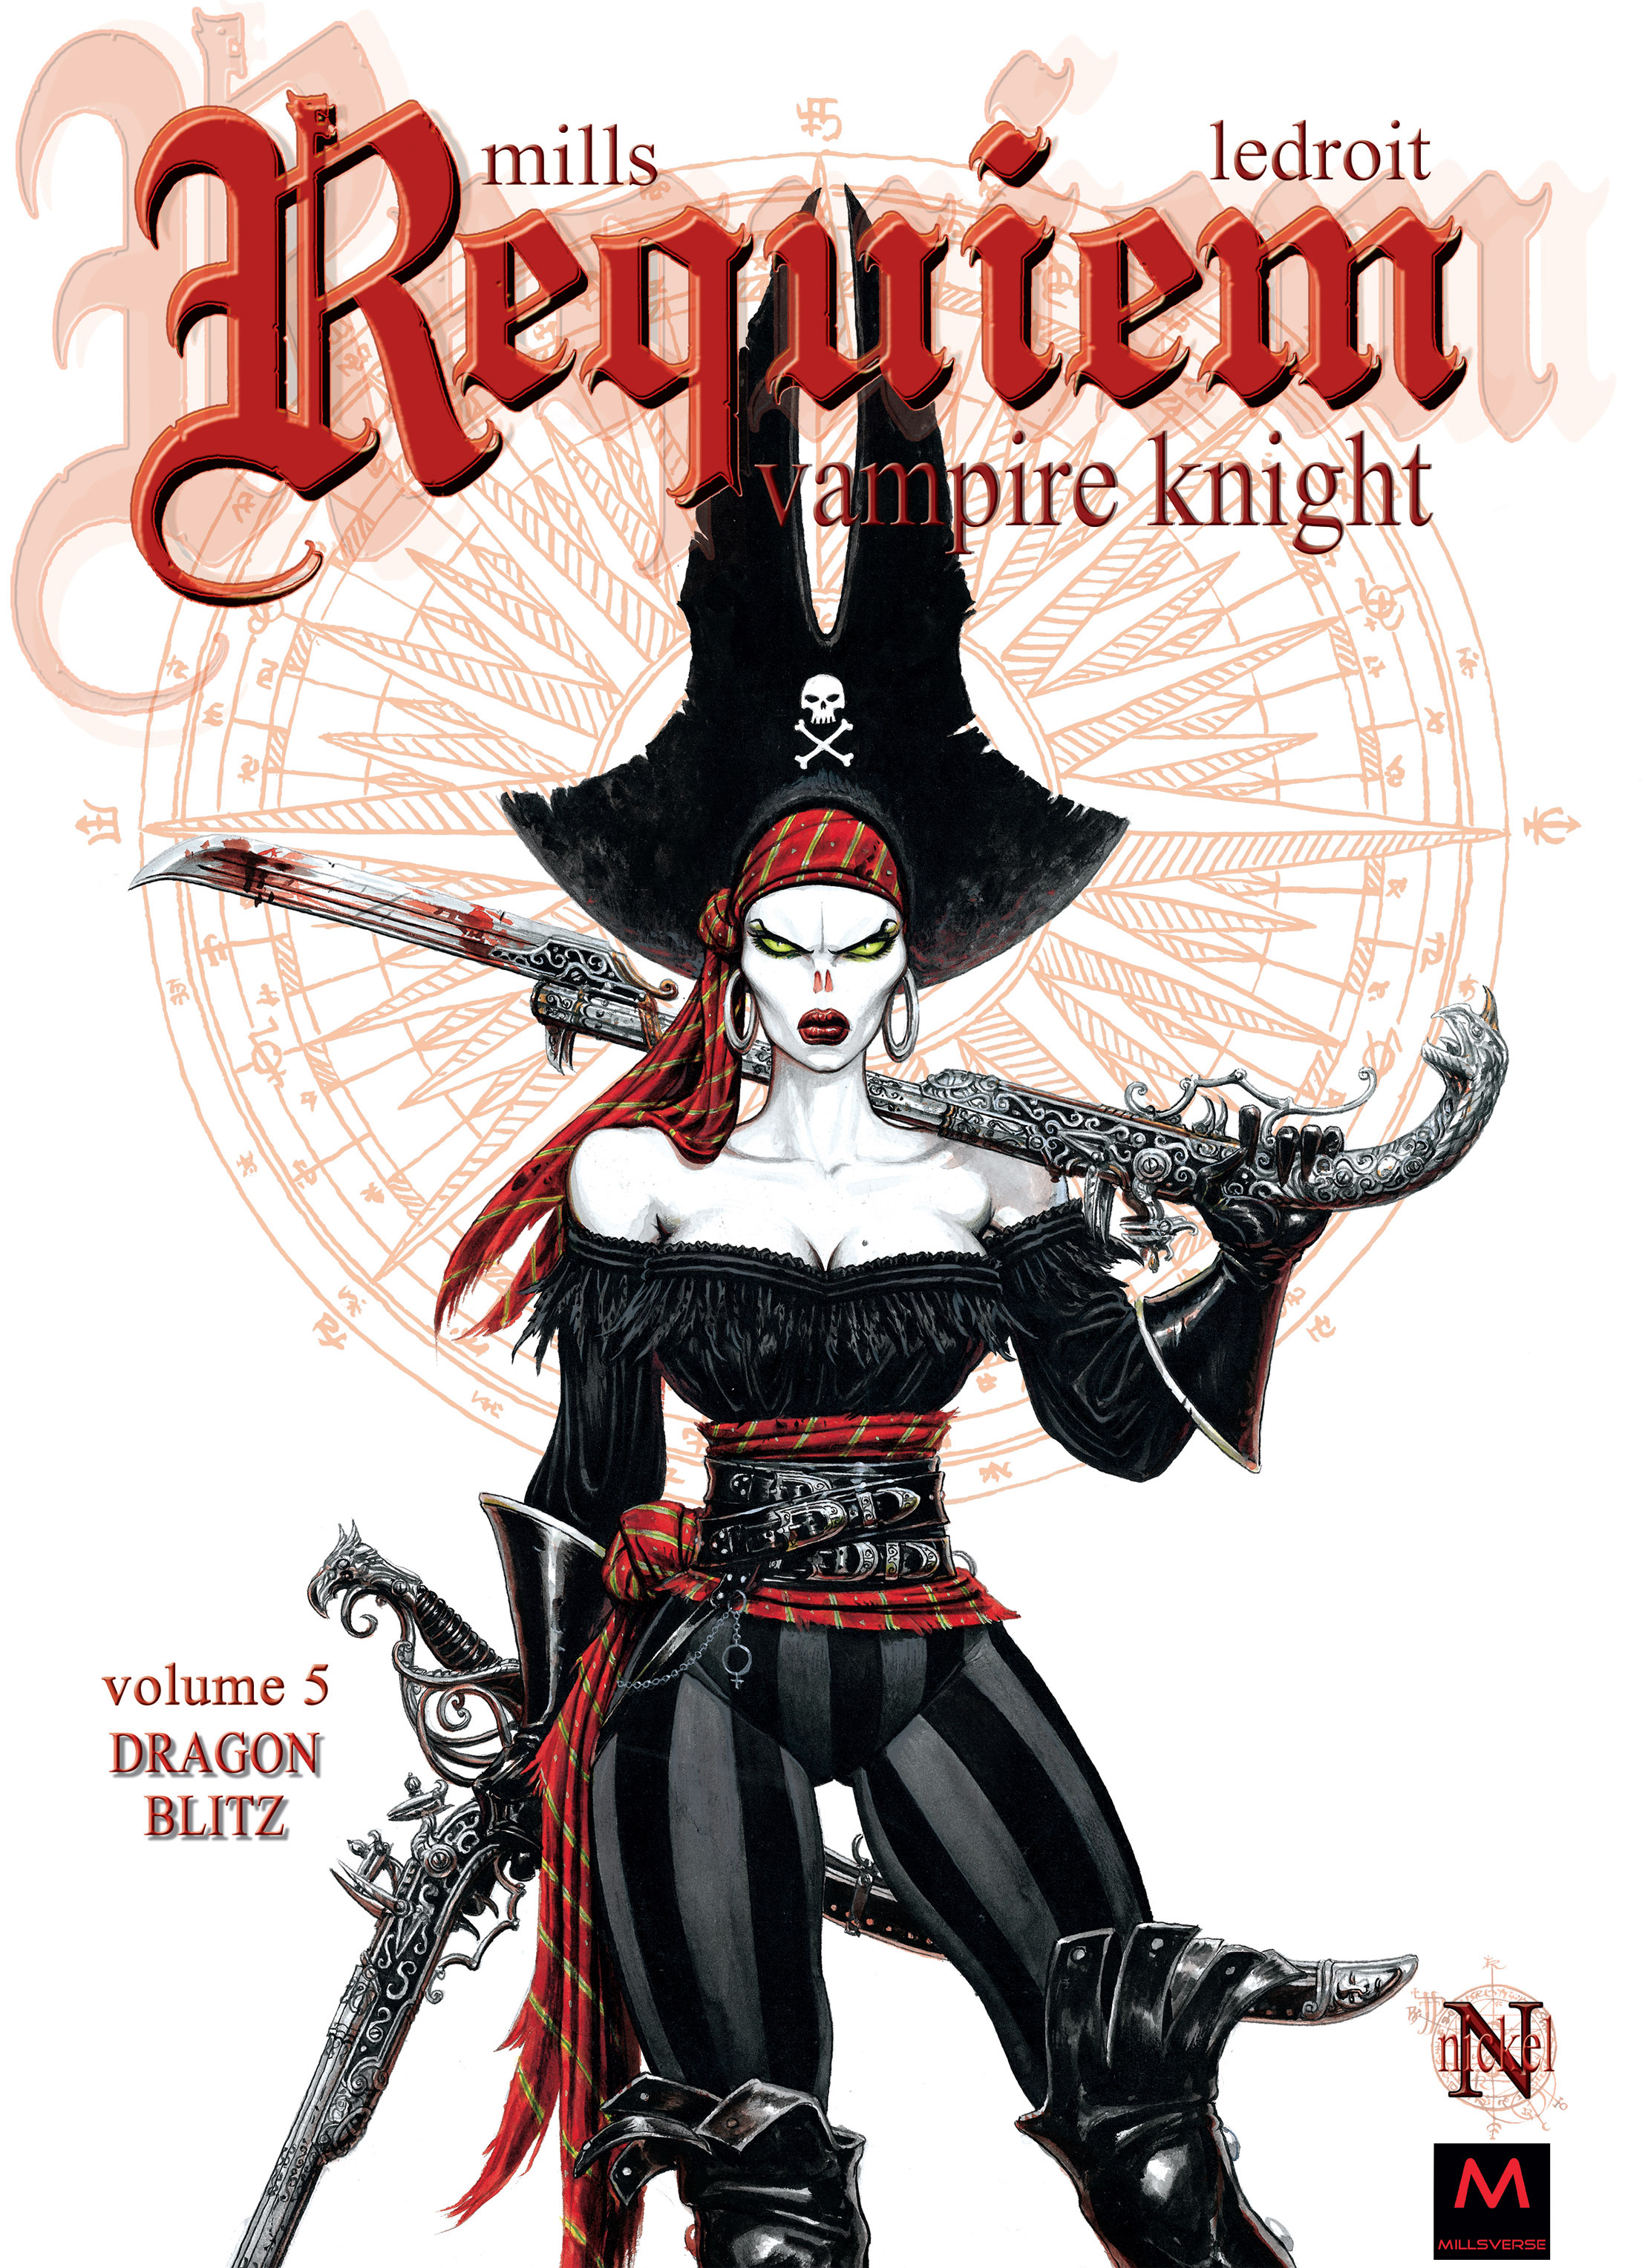 Requiem Vampire Knight Issue 5 | Read Requiem Vampire Knight Issue 5 comic  online in high quality. Read Full Comic online for free - Read comics  online in high quality .|viewcomiconline.com